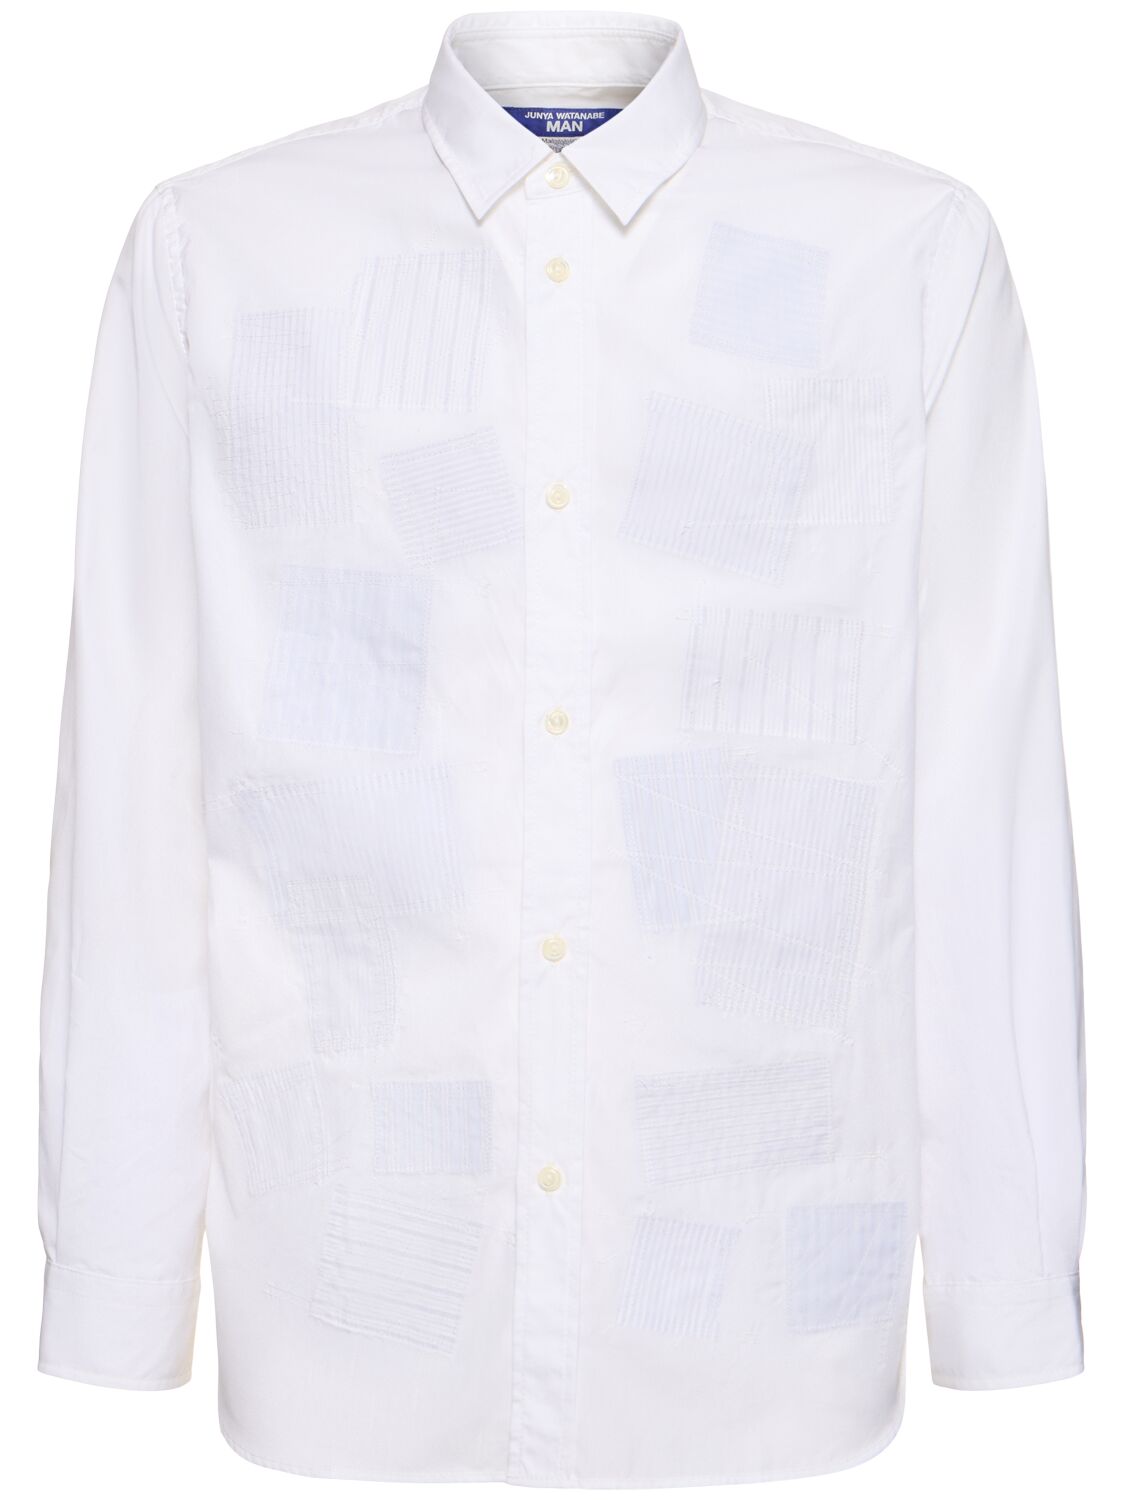 Image of Cotton Broad Shirt